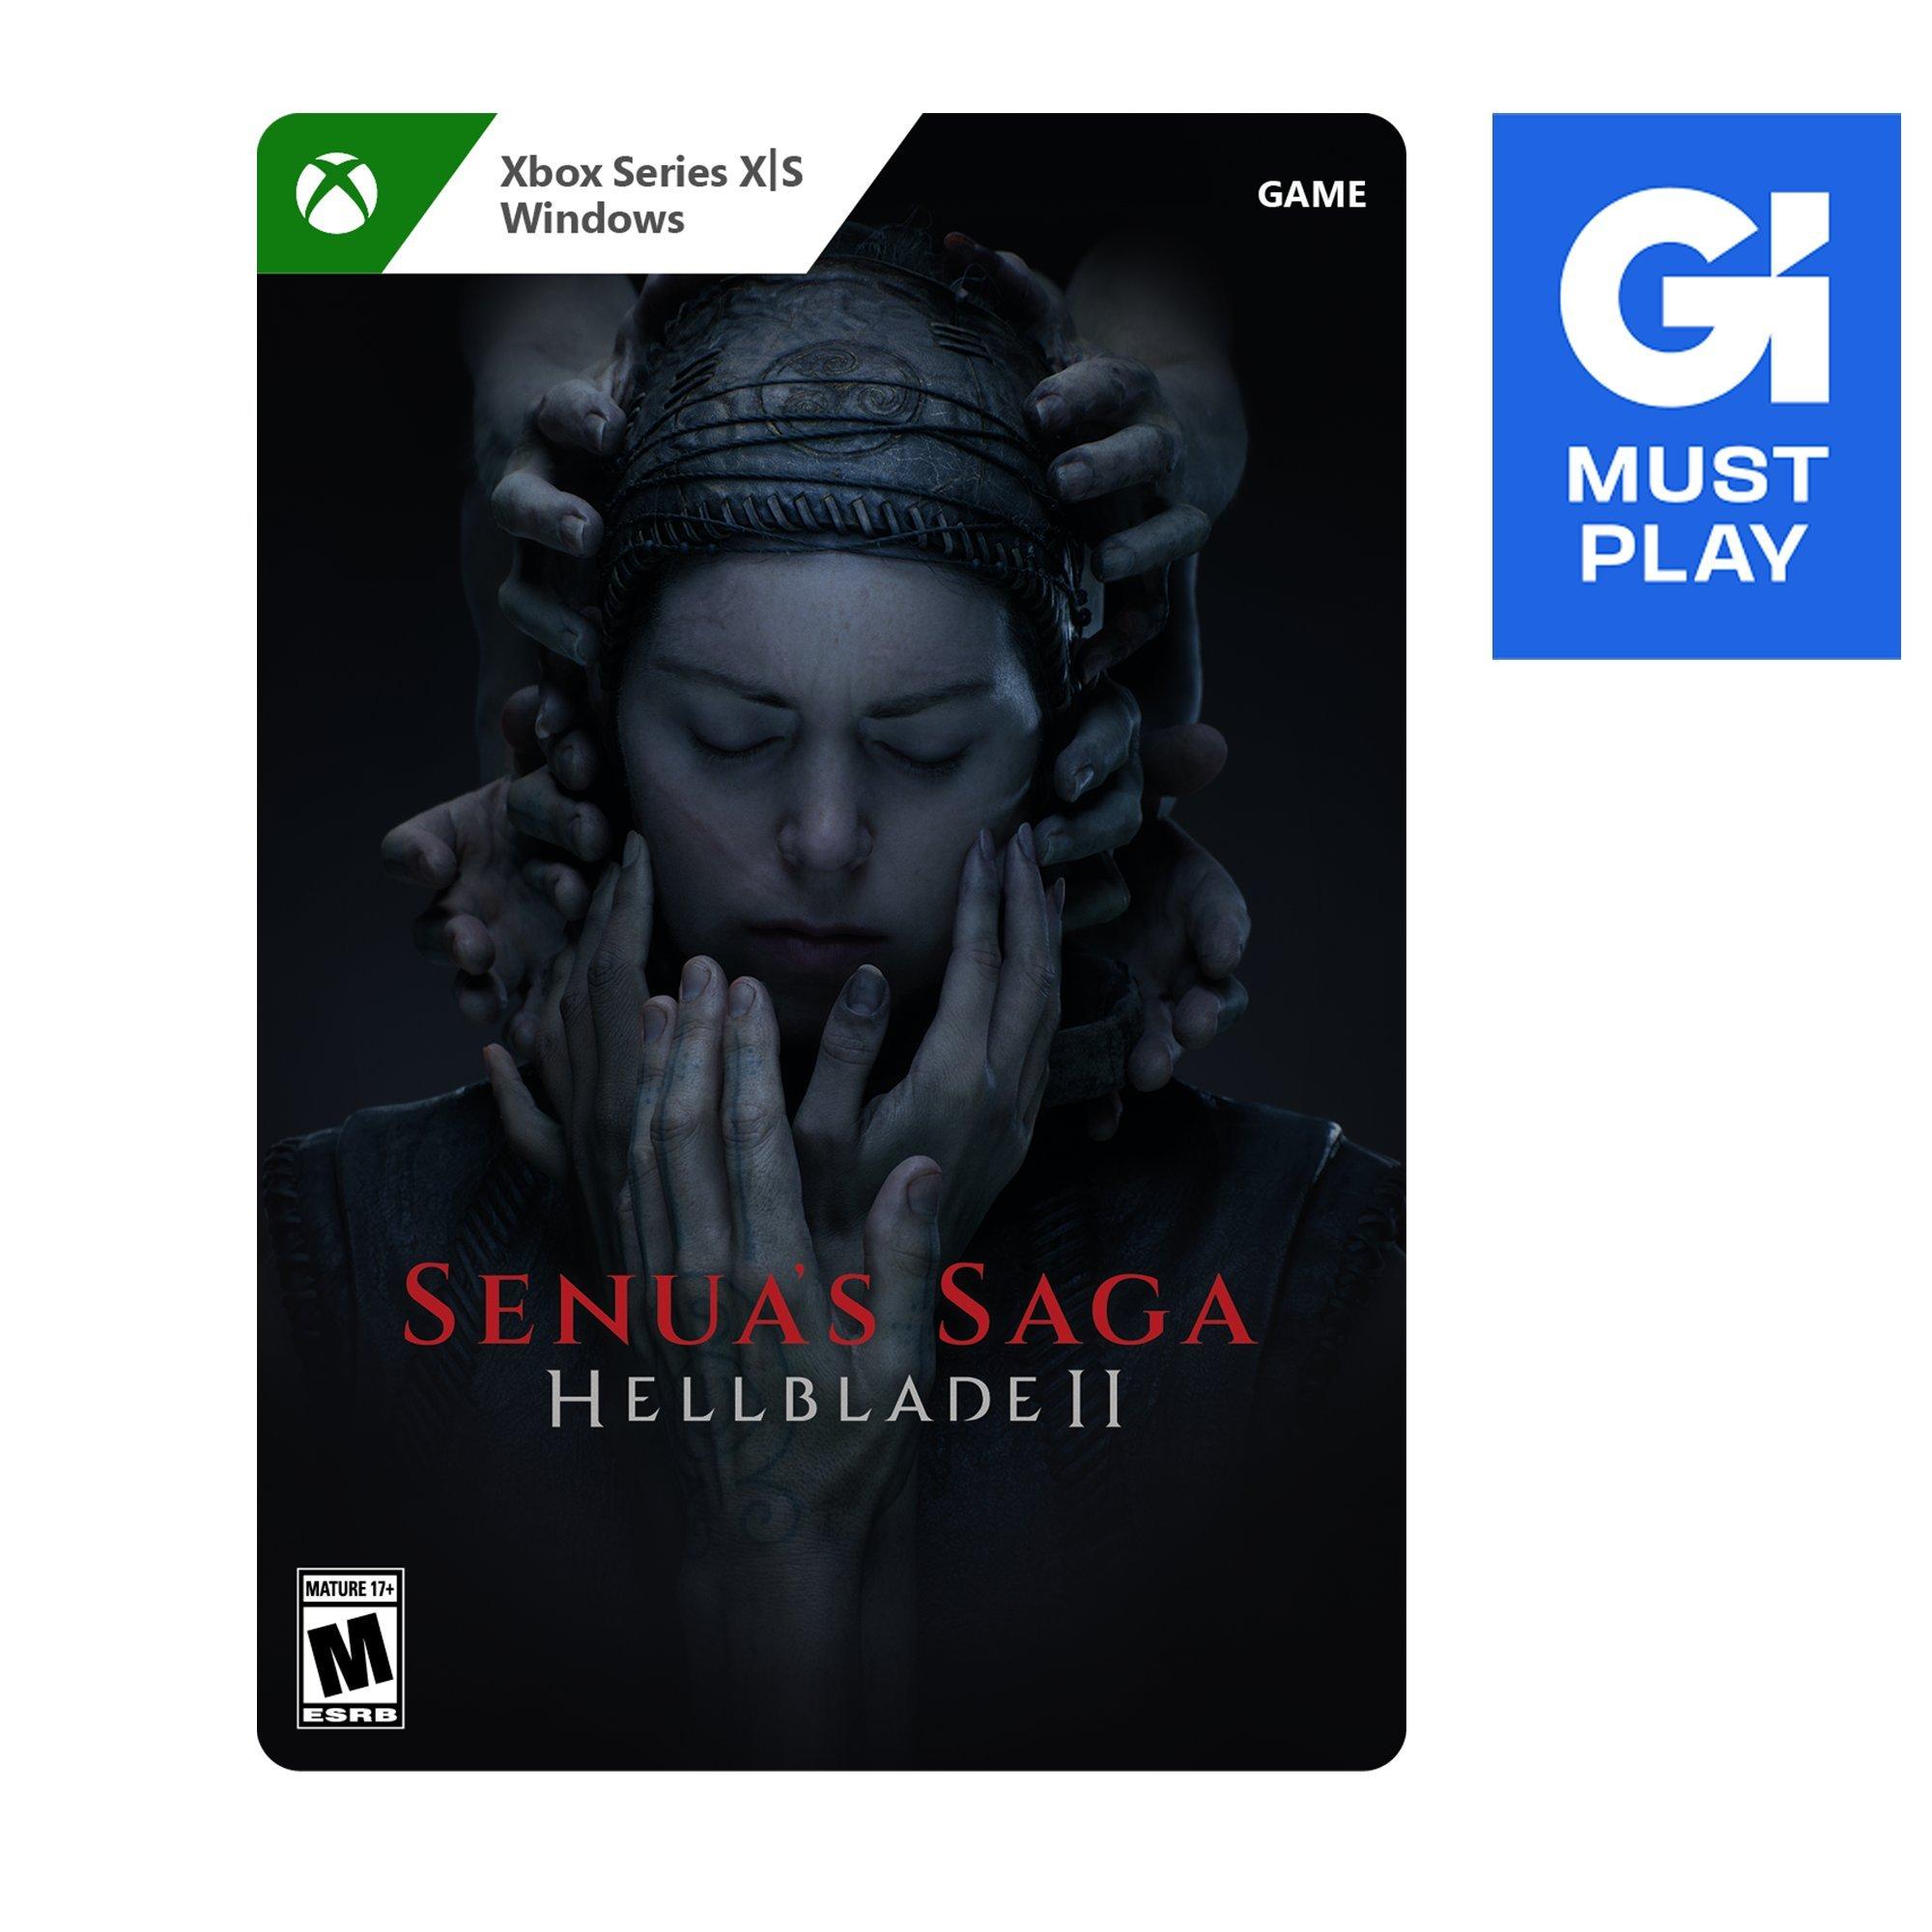 Senua's Saga: Hellblade II's first gameplay trailer is